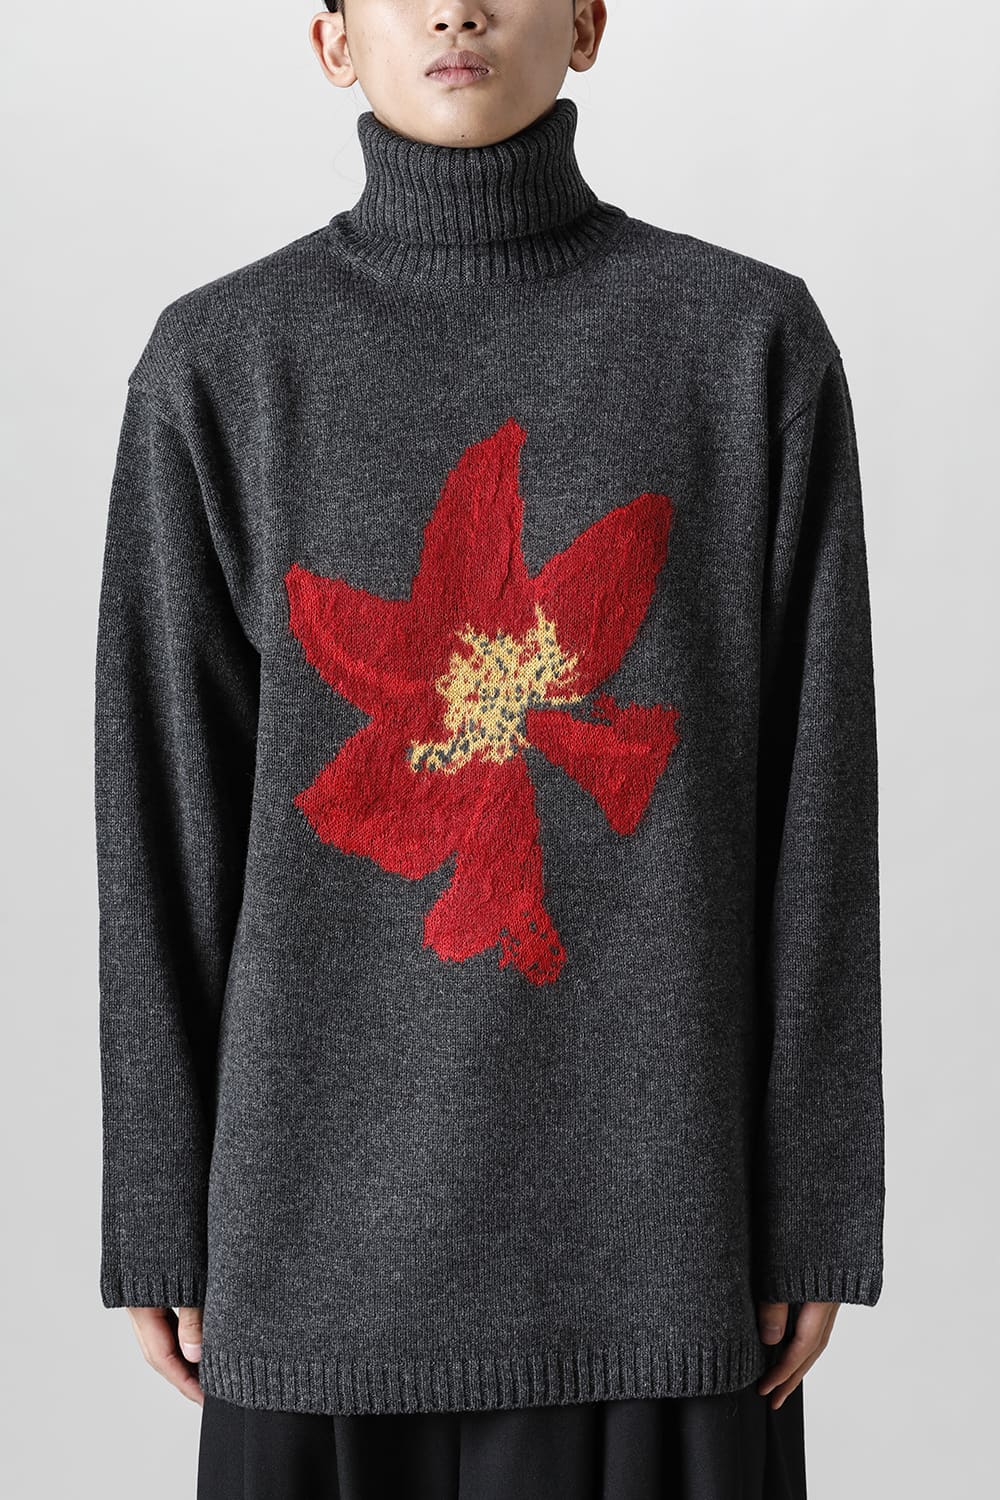 HX-K15-181 | Floral pattern Turtleneck Long sleeve Knit | Yohji 